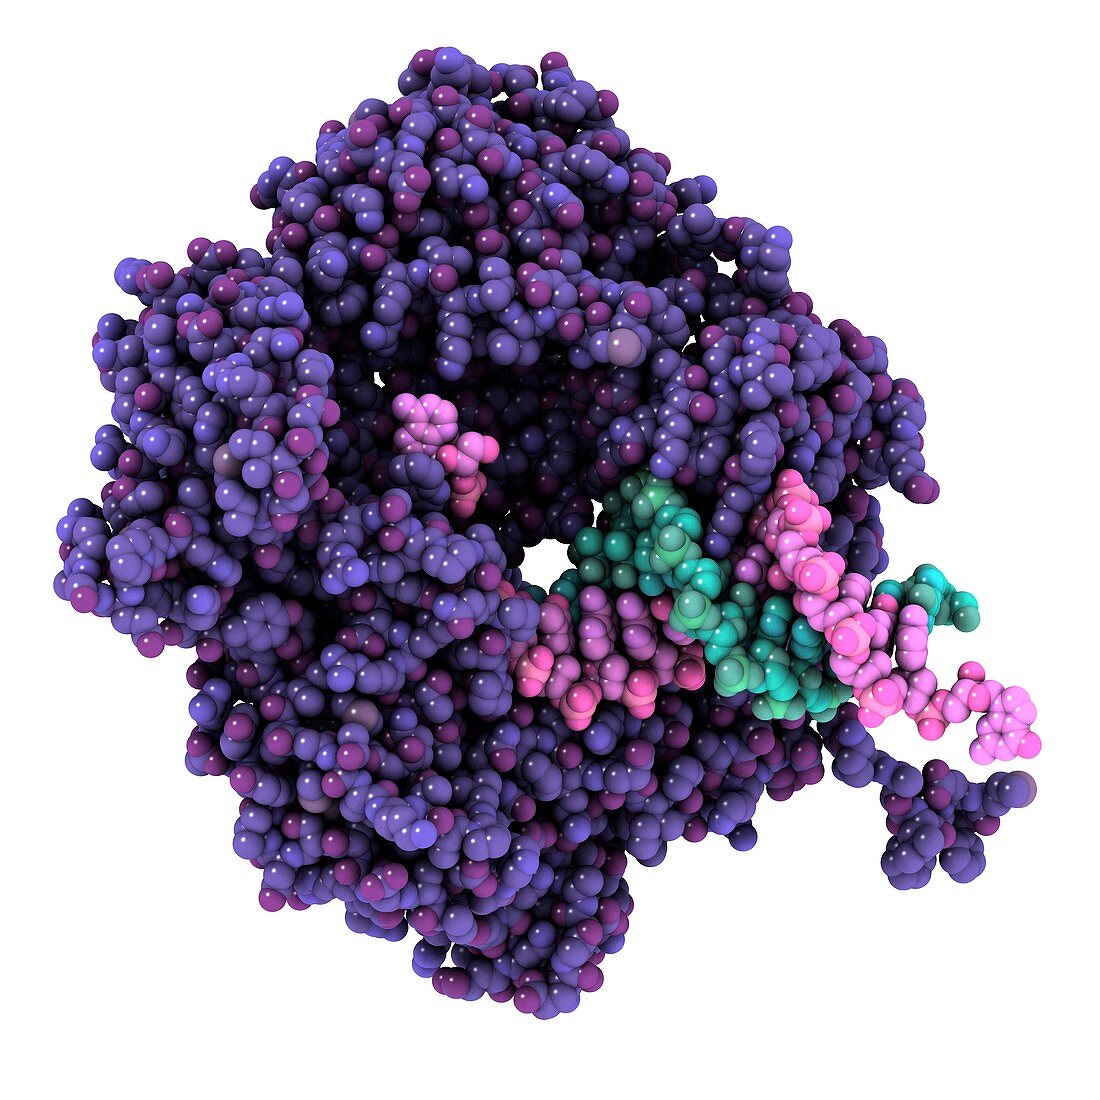 RNA polymerase alpha subunit